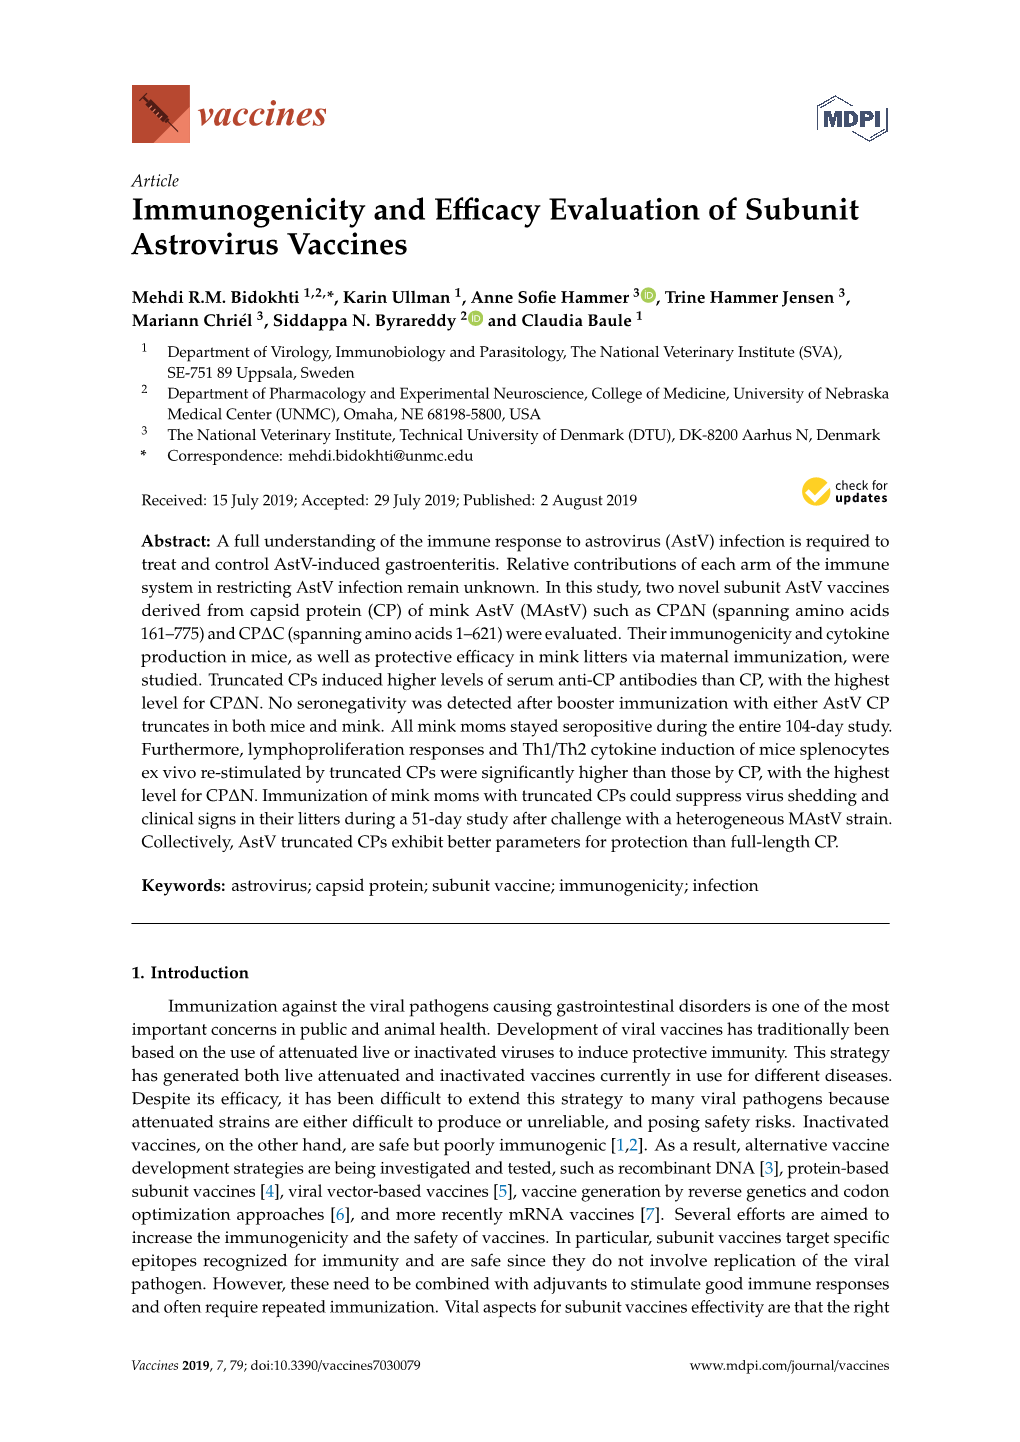 Immunogenicity and Efficacy Evaluation of Subunit Astrovirus